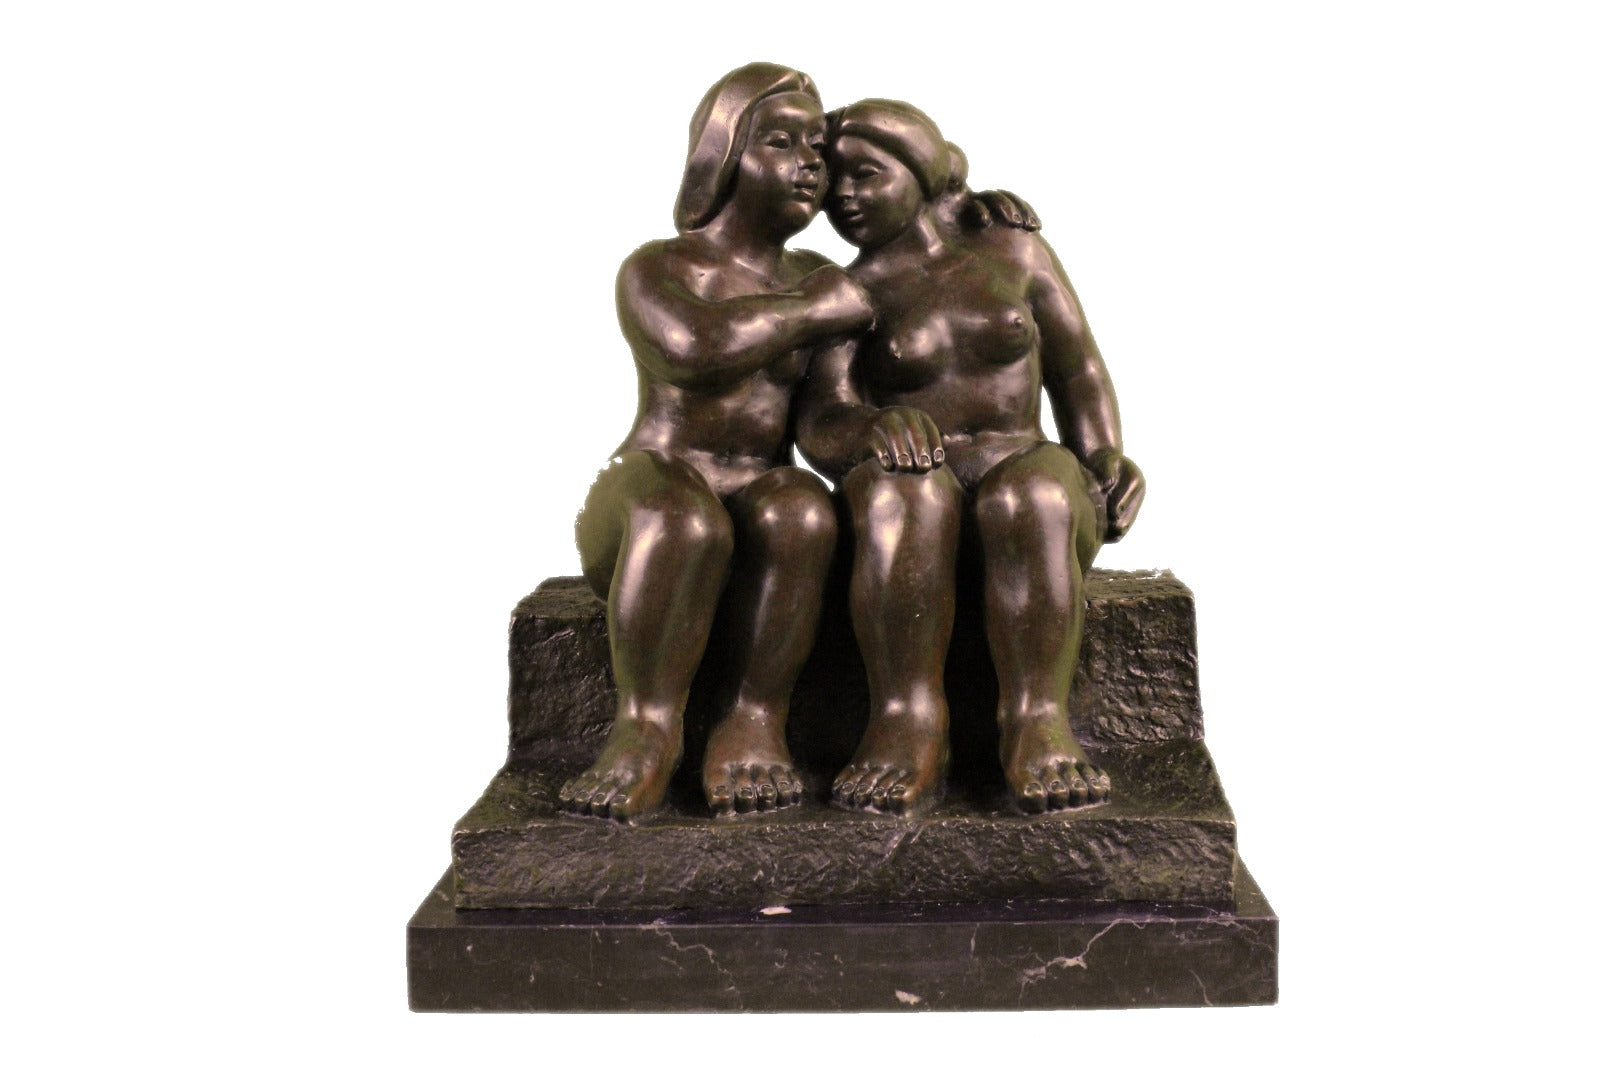 Handcrafted bronze sculpture SALE Nude Sensual Art Abstract Figurative Botero